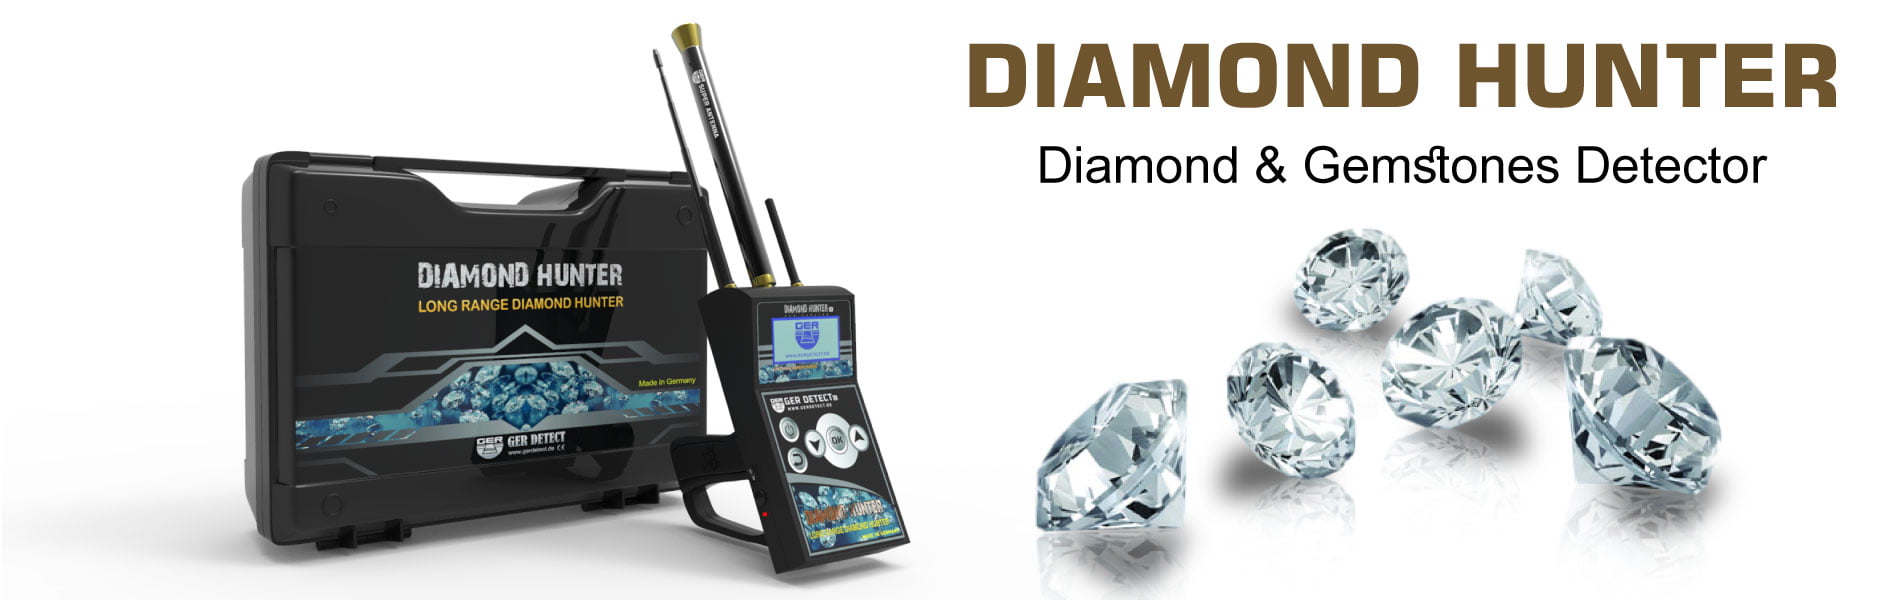 diamond-hunter-long-range-gemstone-detector